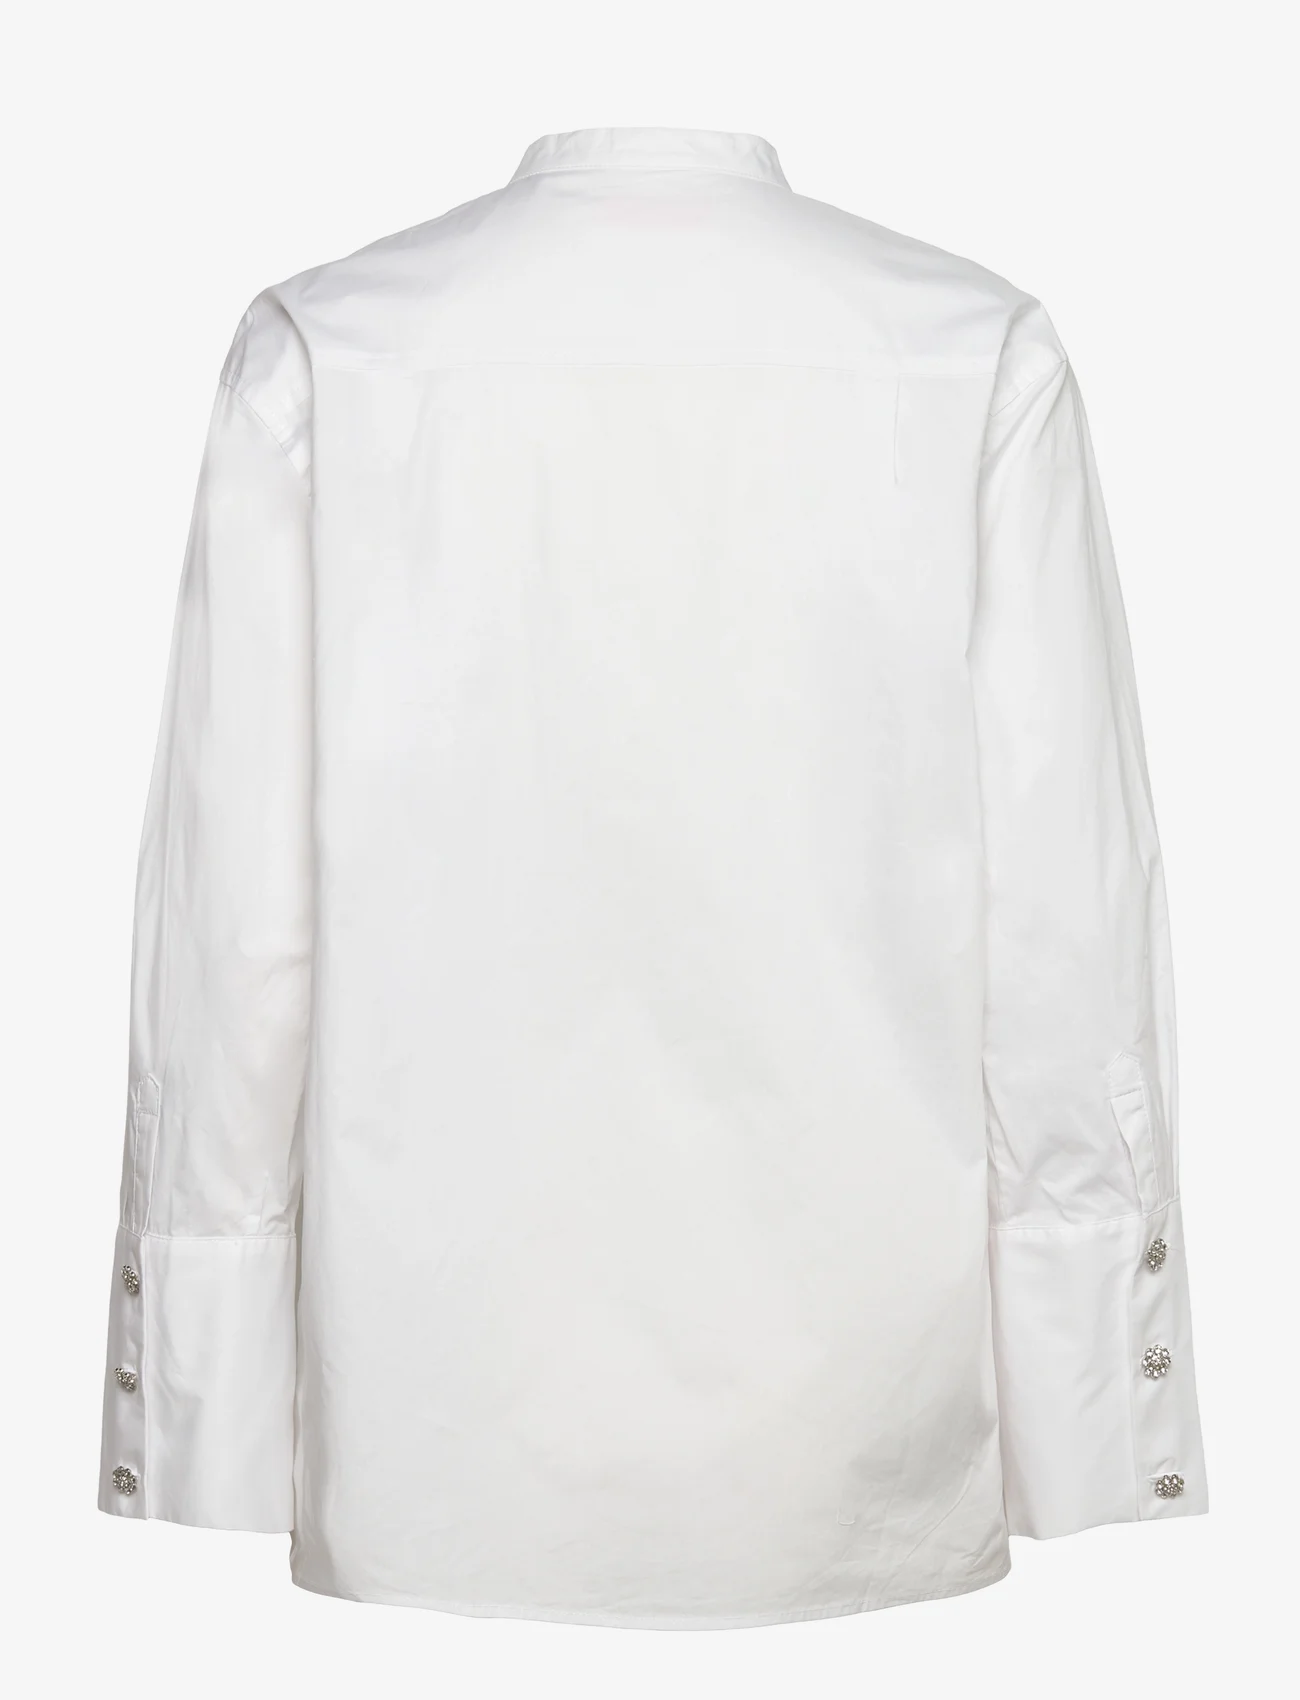 Custommade - Banni - marškiniai ilgomis rankovėmis - 001 bright white - 1